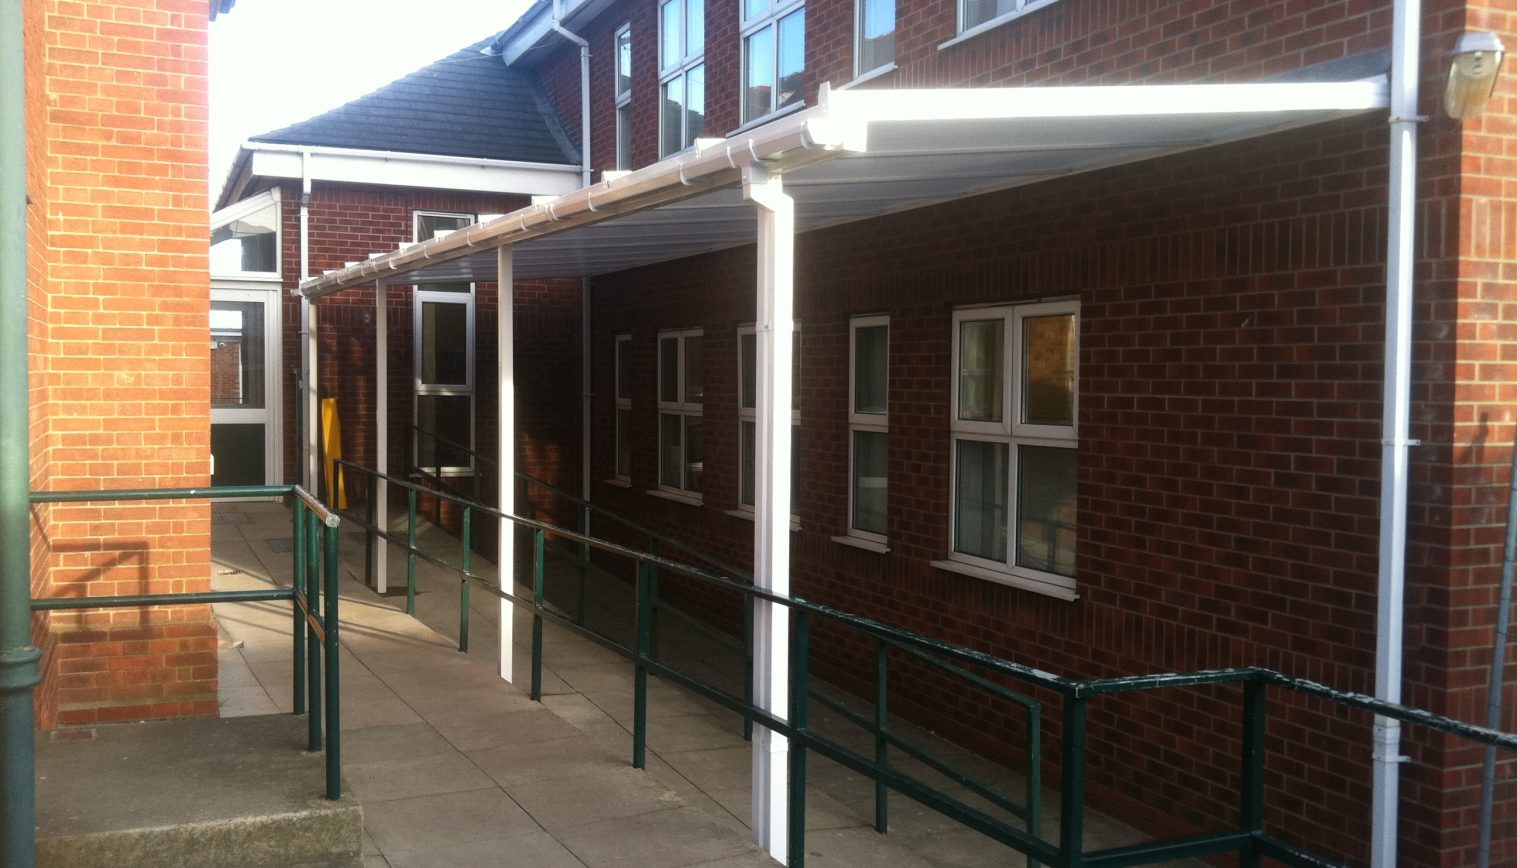 Skegness Grammar School – Wall Mounted Canopy